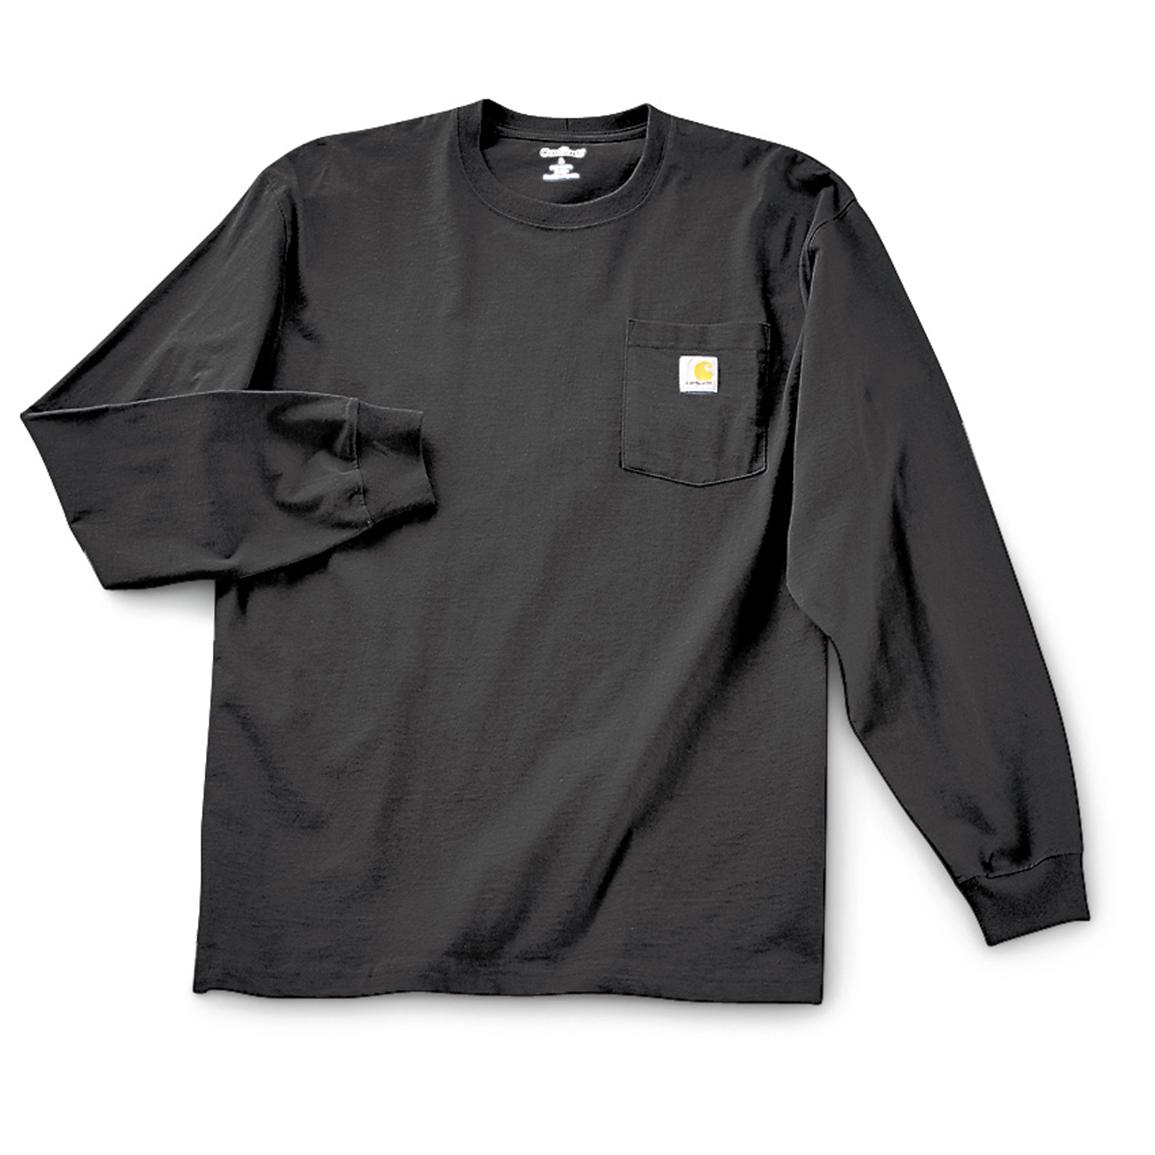 Carhartt Men's Workwear Long-Sleeve Pocket T-Shirt, Black